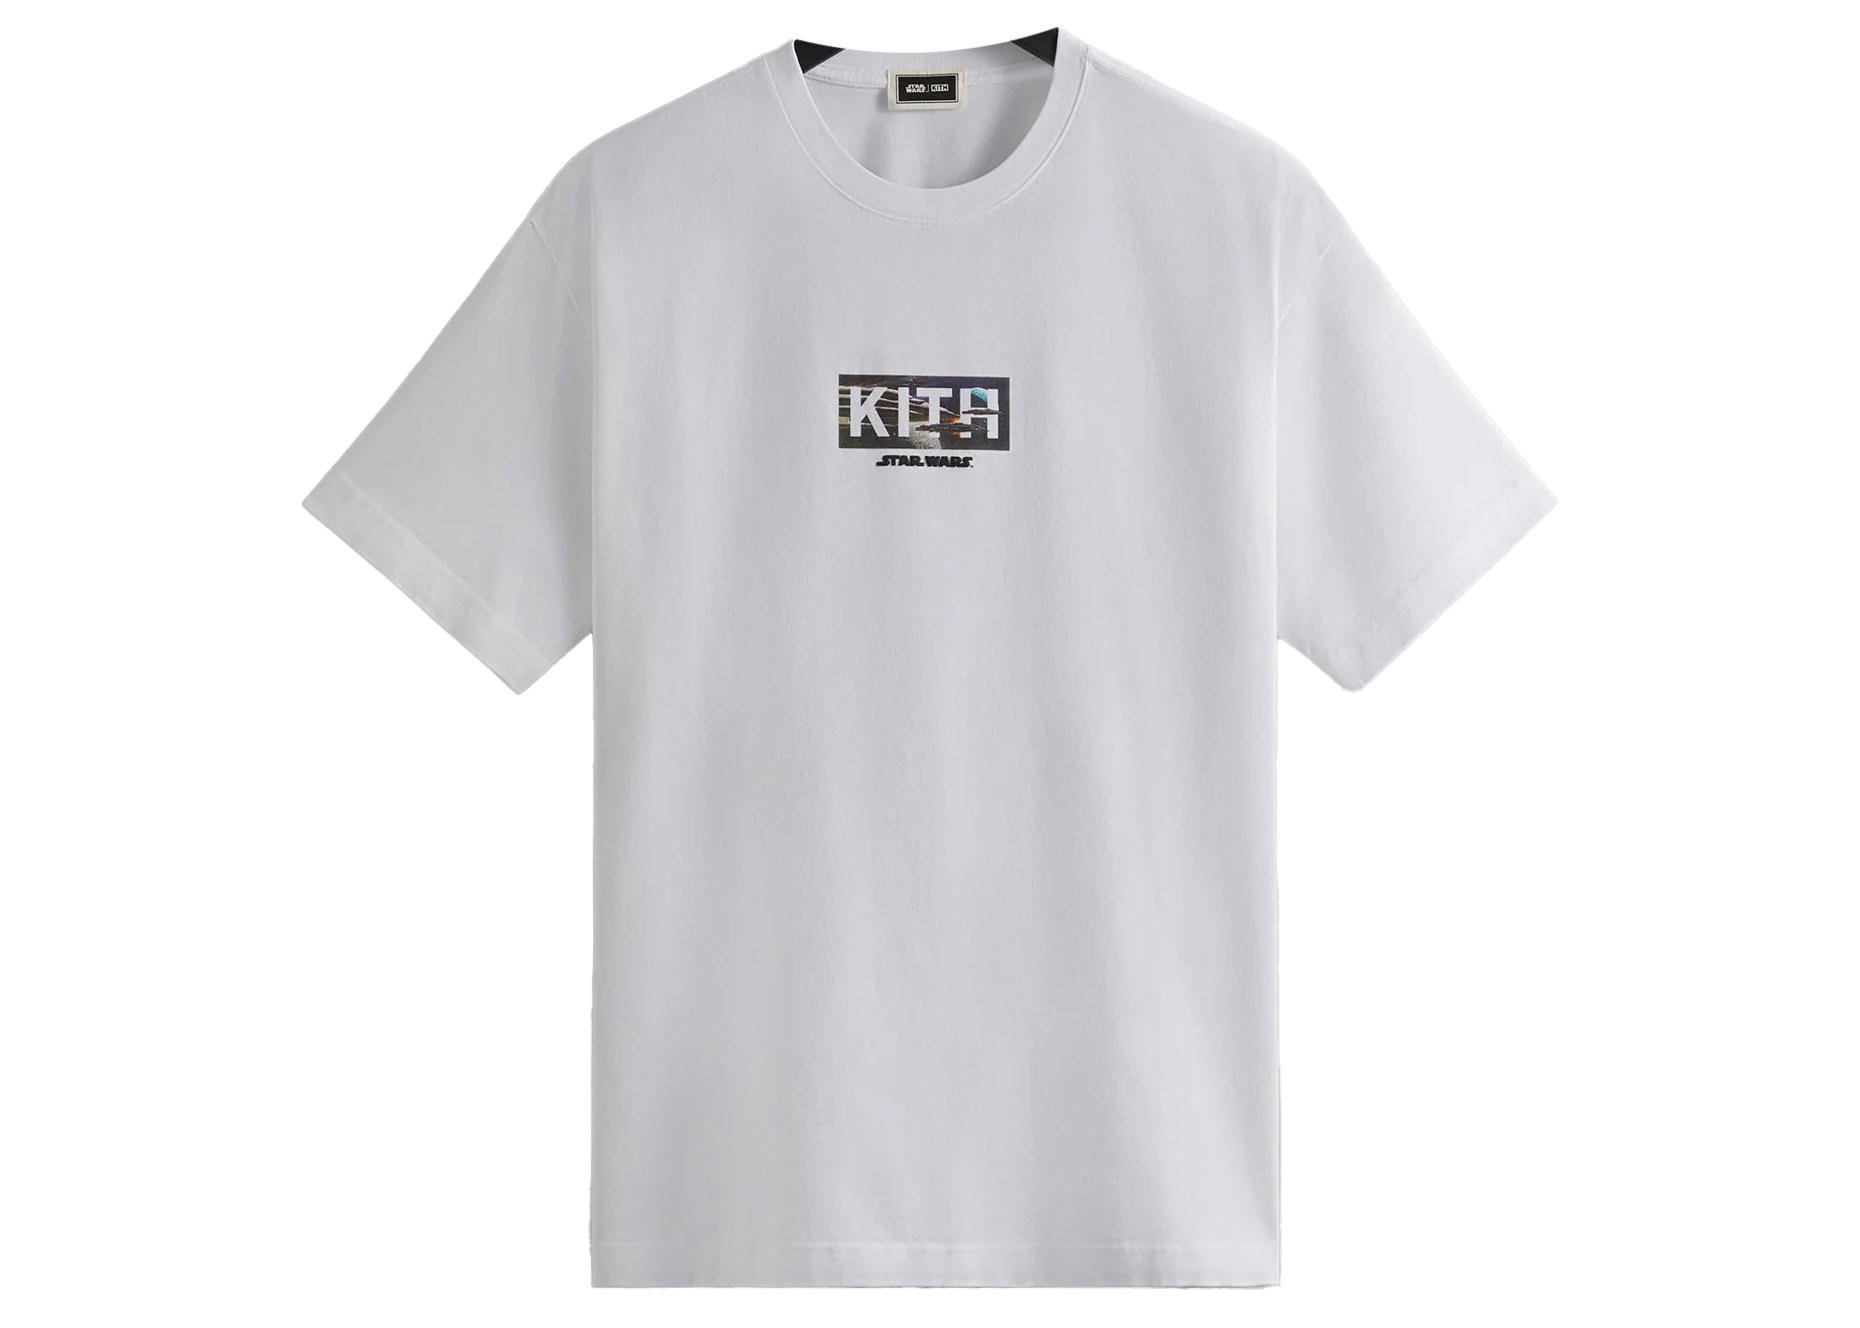 Buy Kith Streetwear - StockX